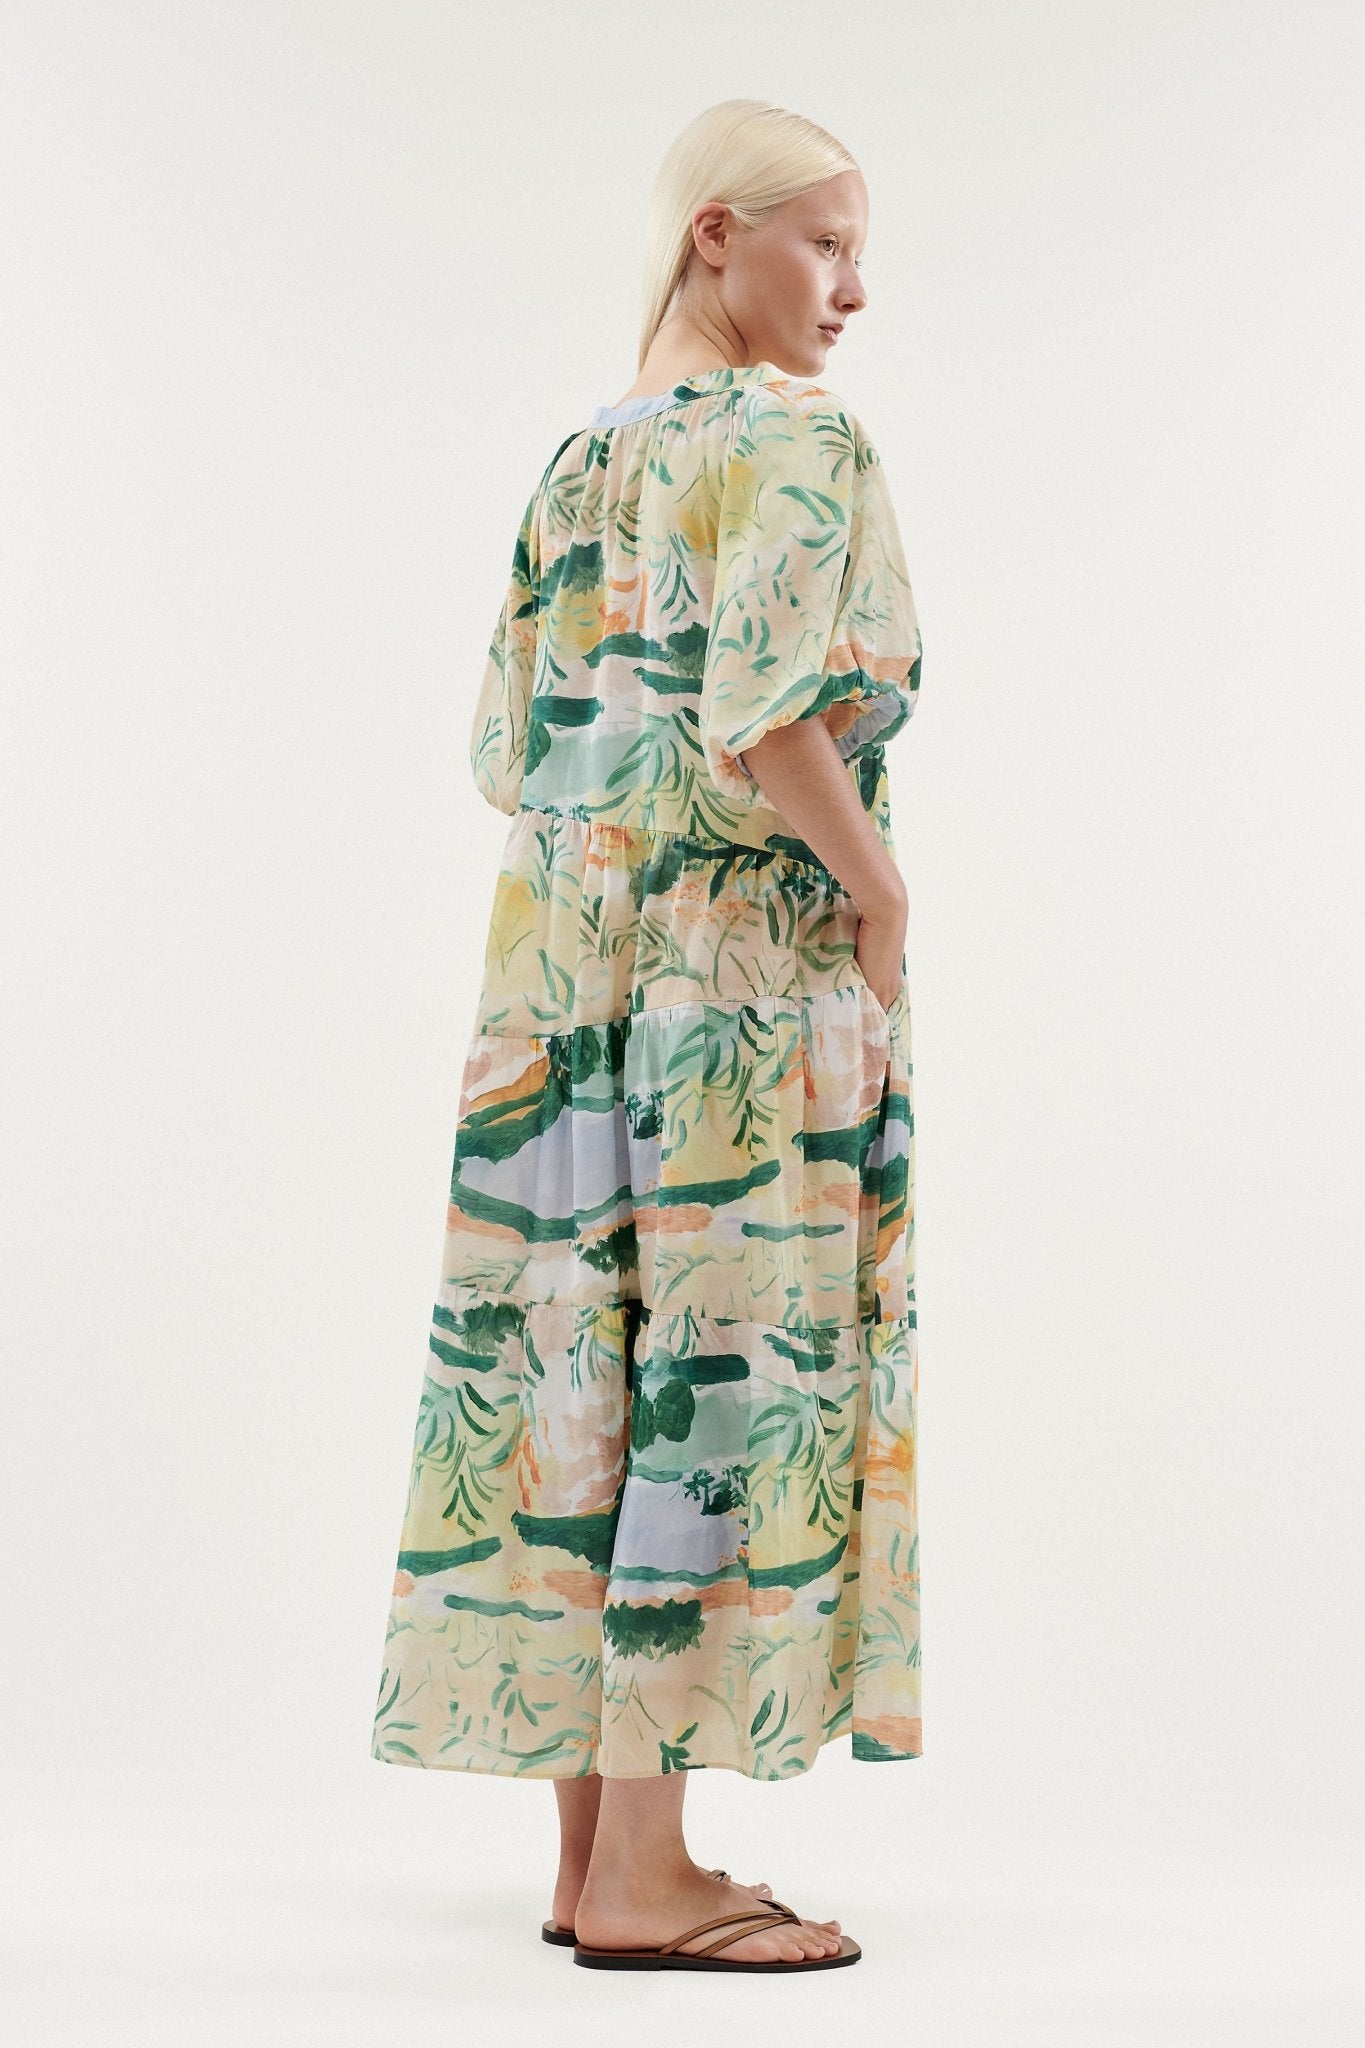 Shop Printed Akta Dress in Landscape Print by Layer'd - Layer'd